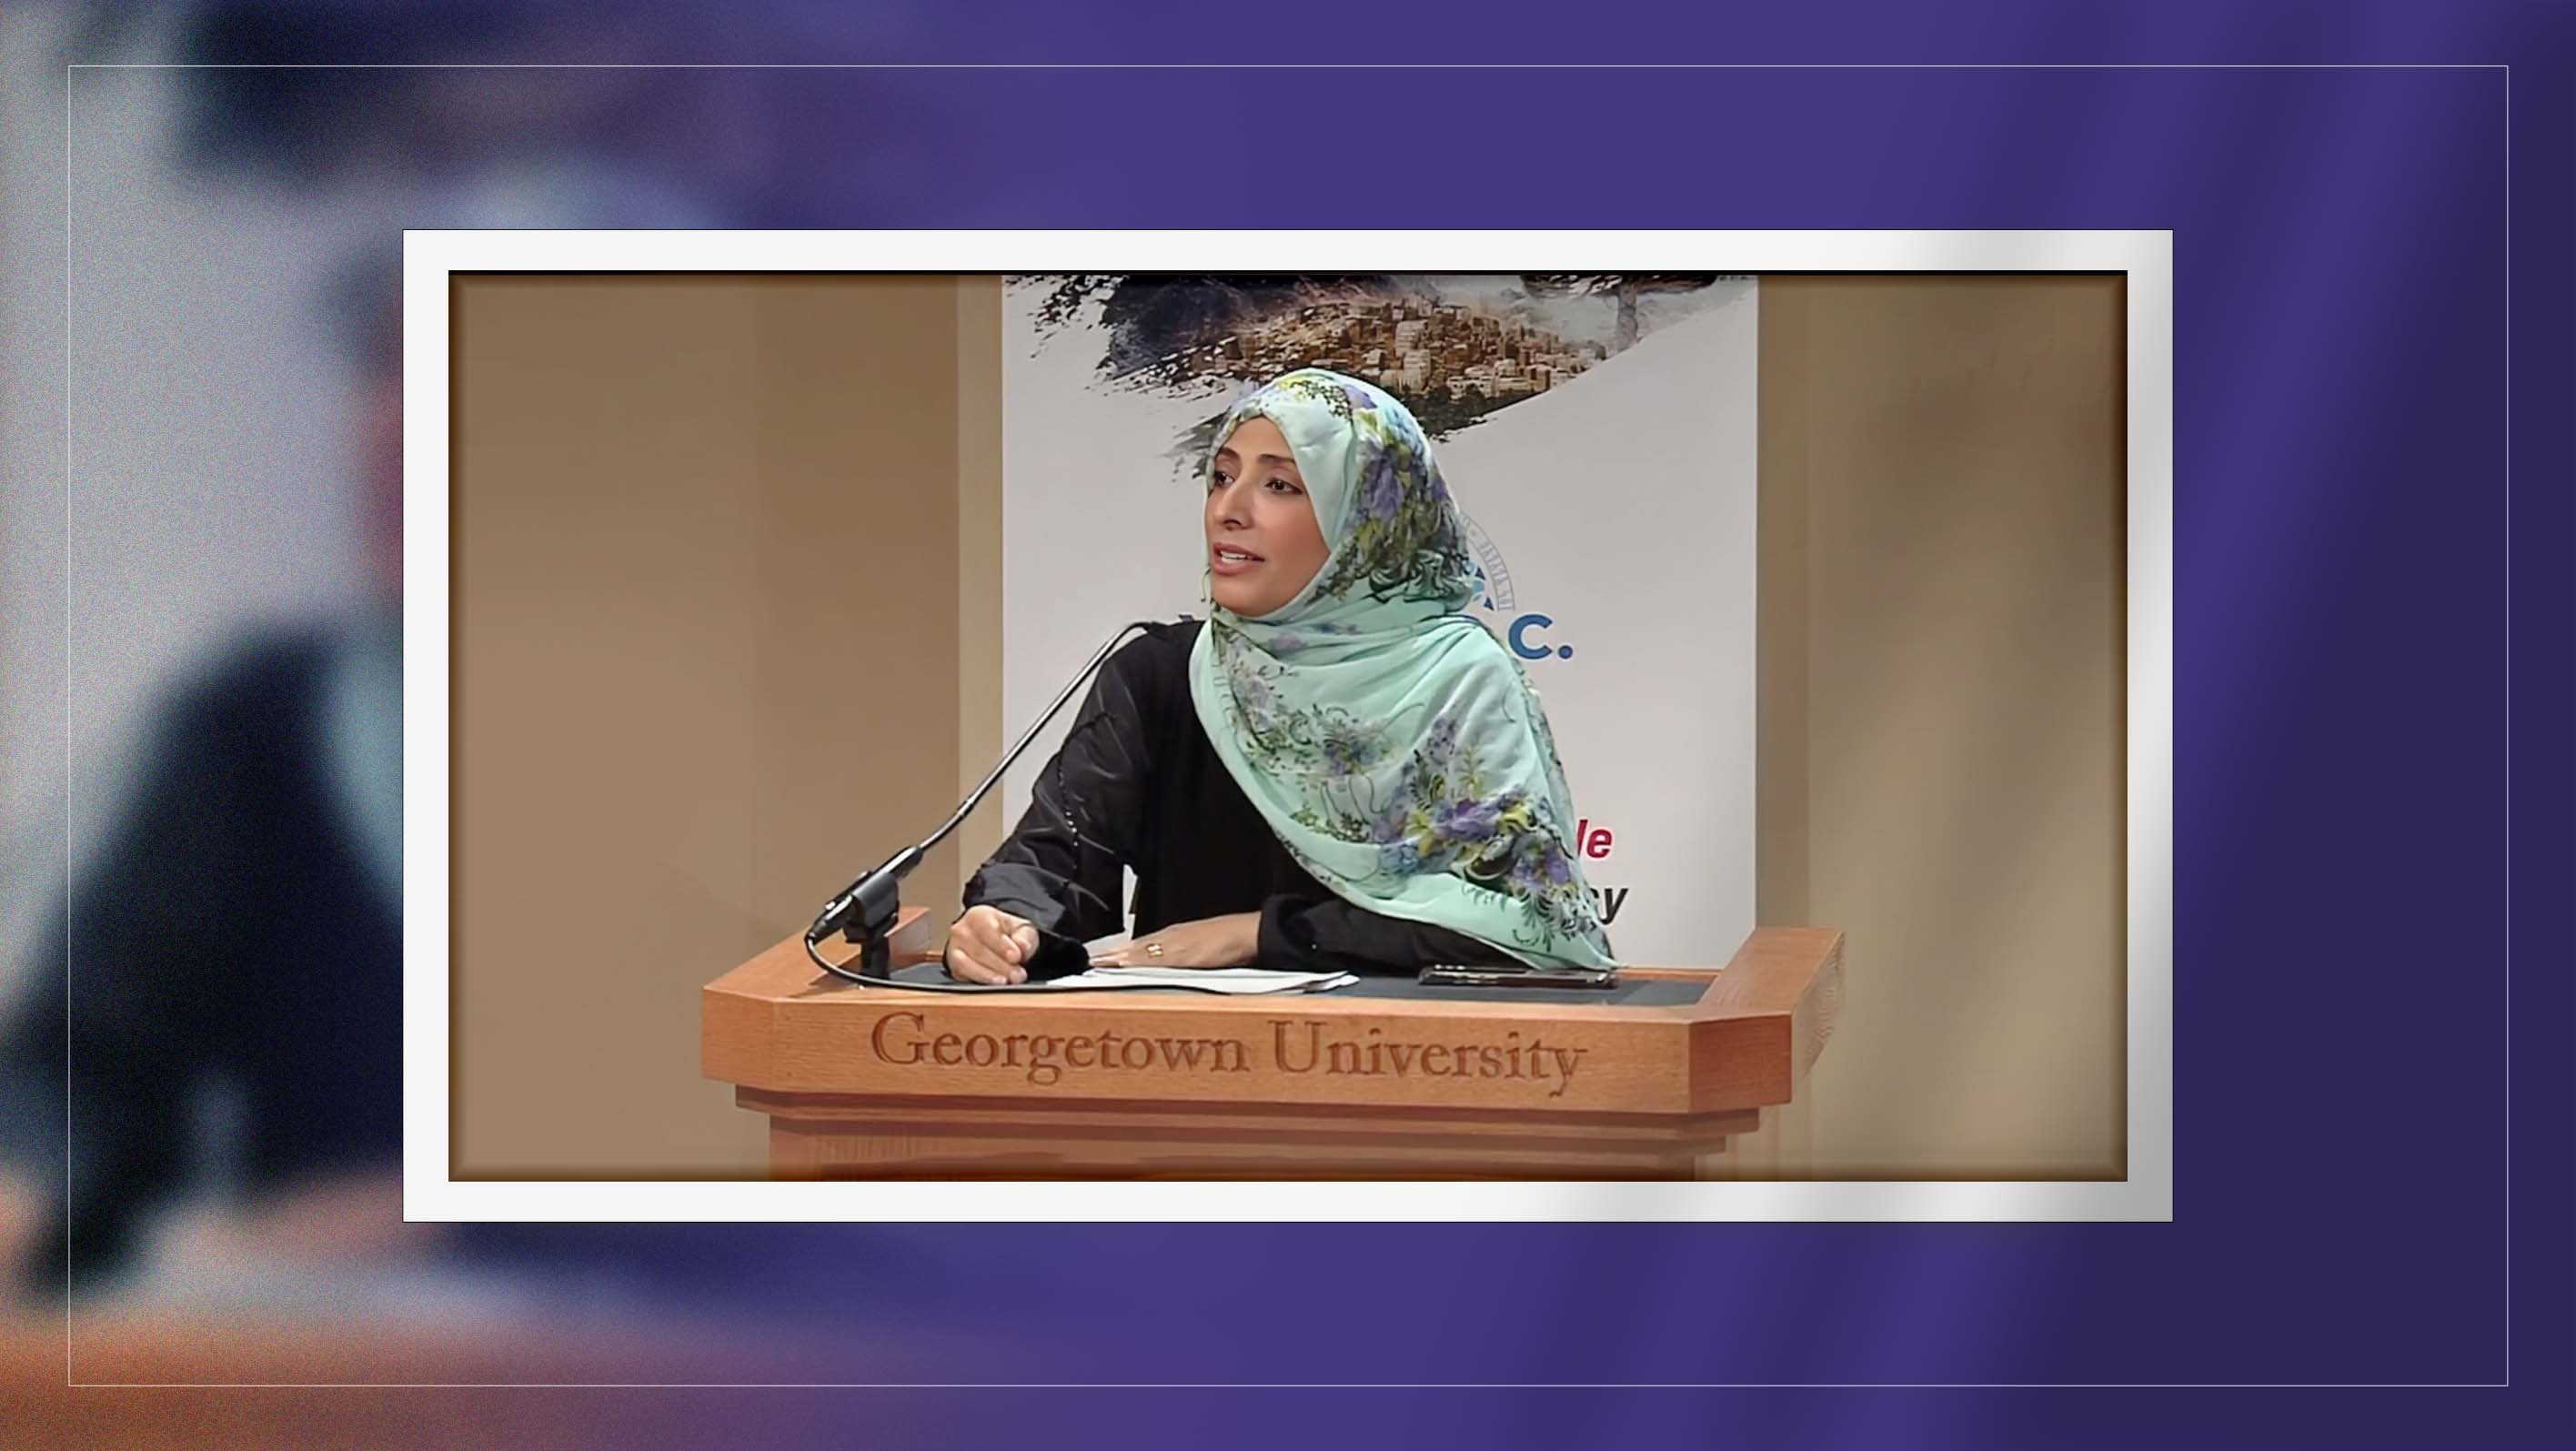 Mrs. Karman to be keynote speaker at international conference on Yemen in Washington